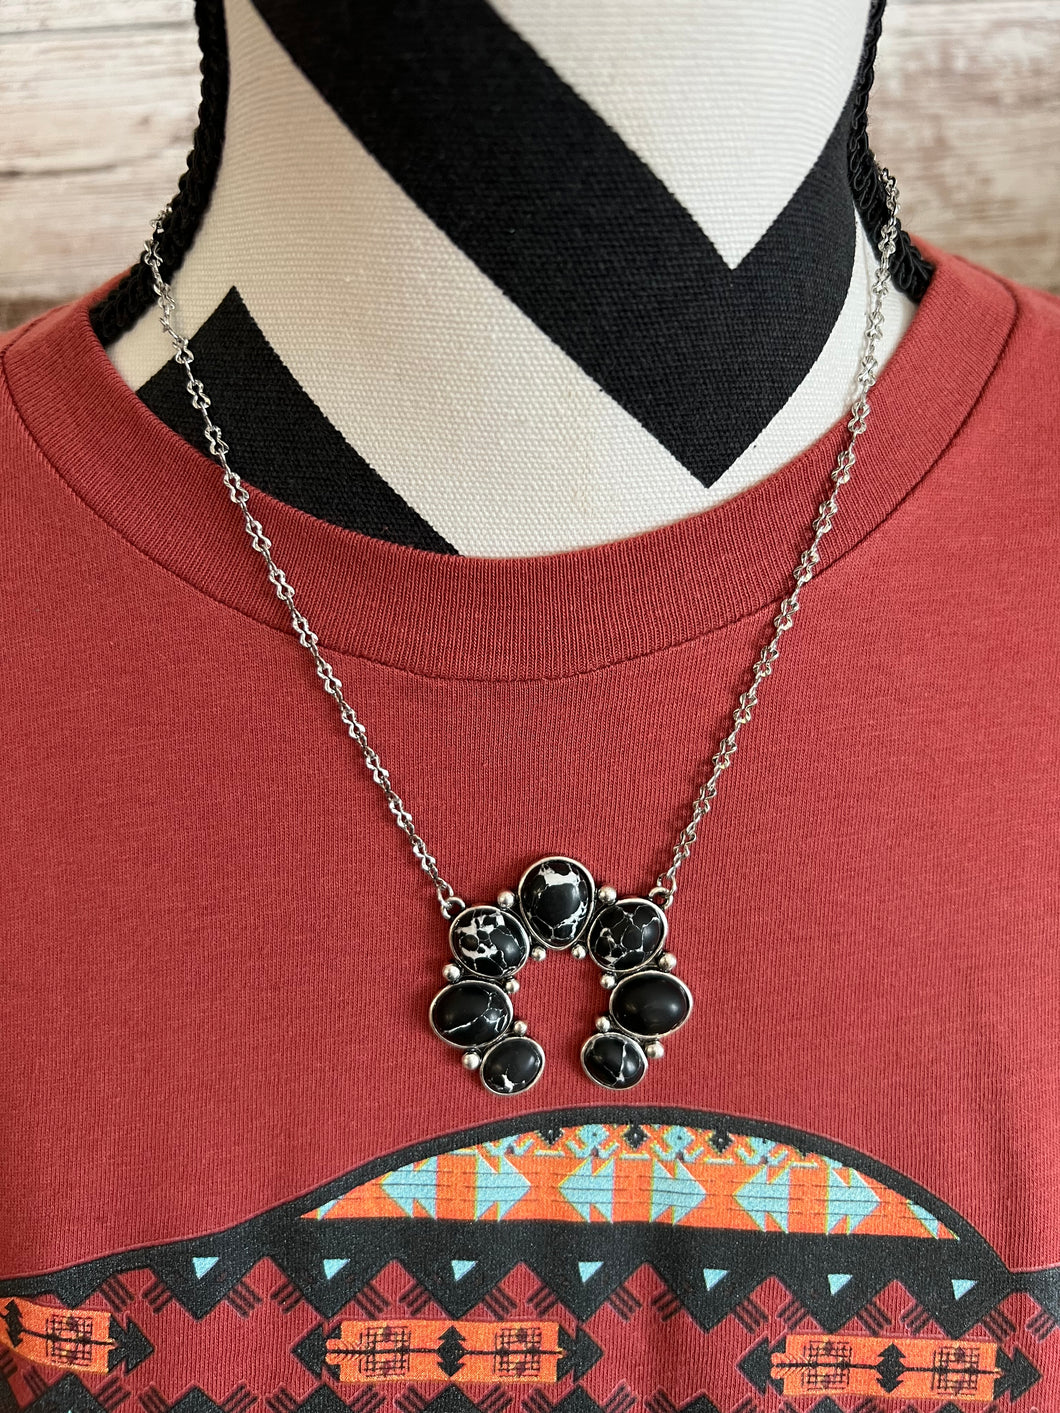 Simple black squash necklace